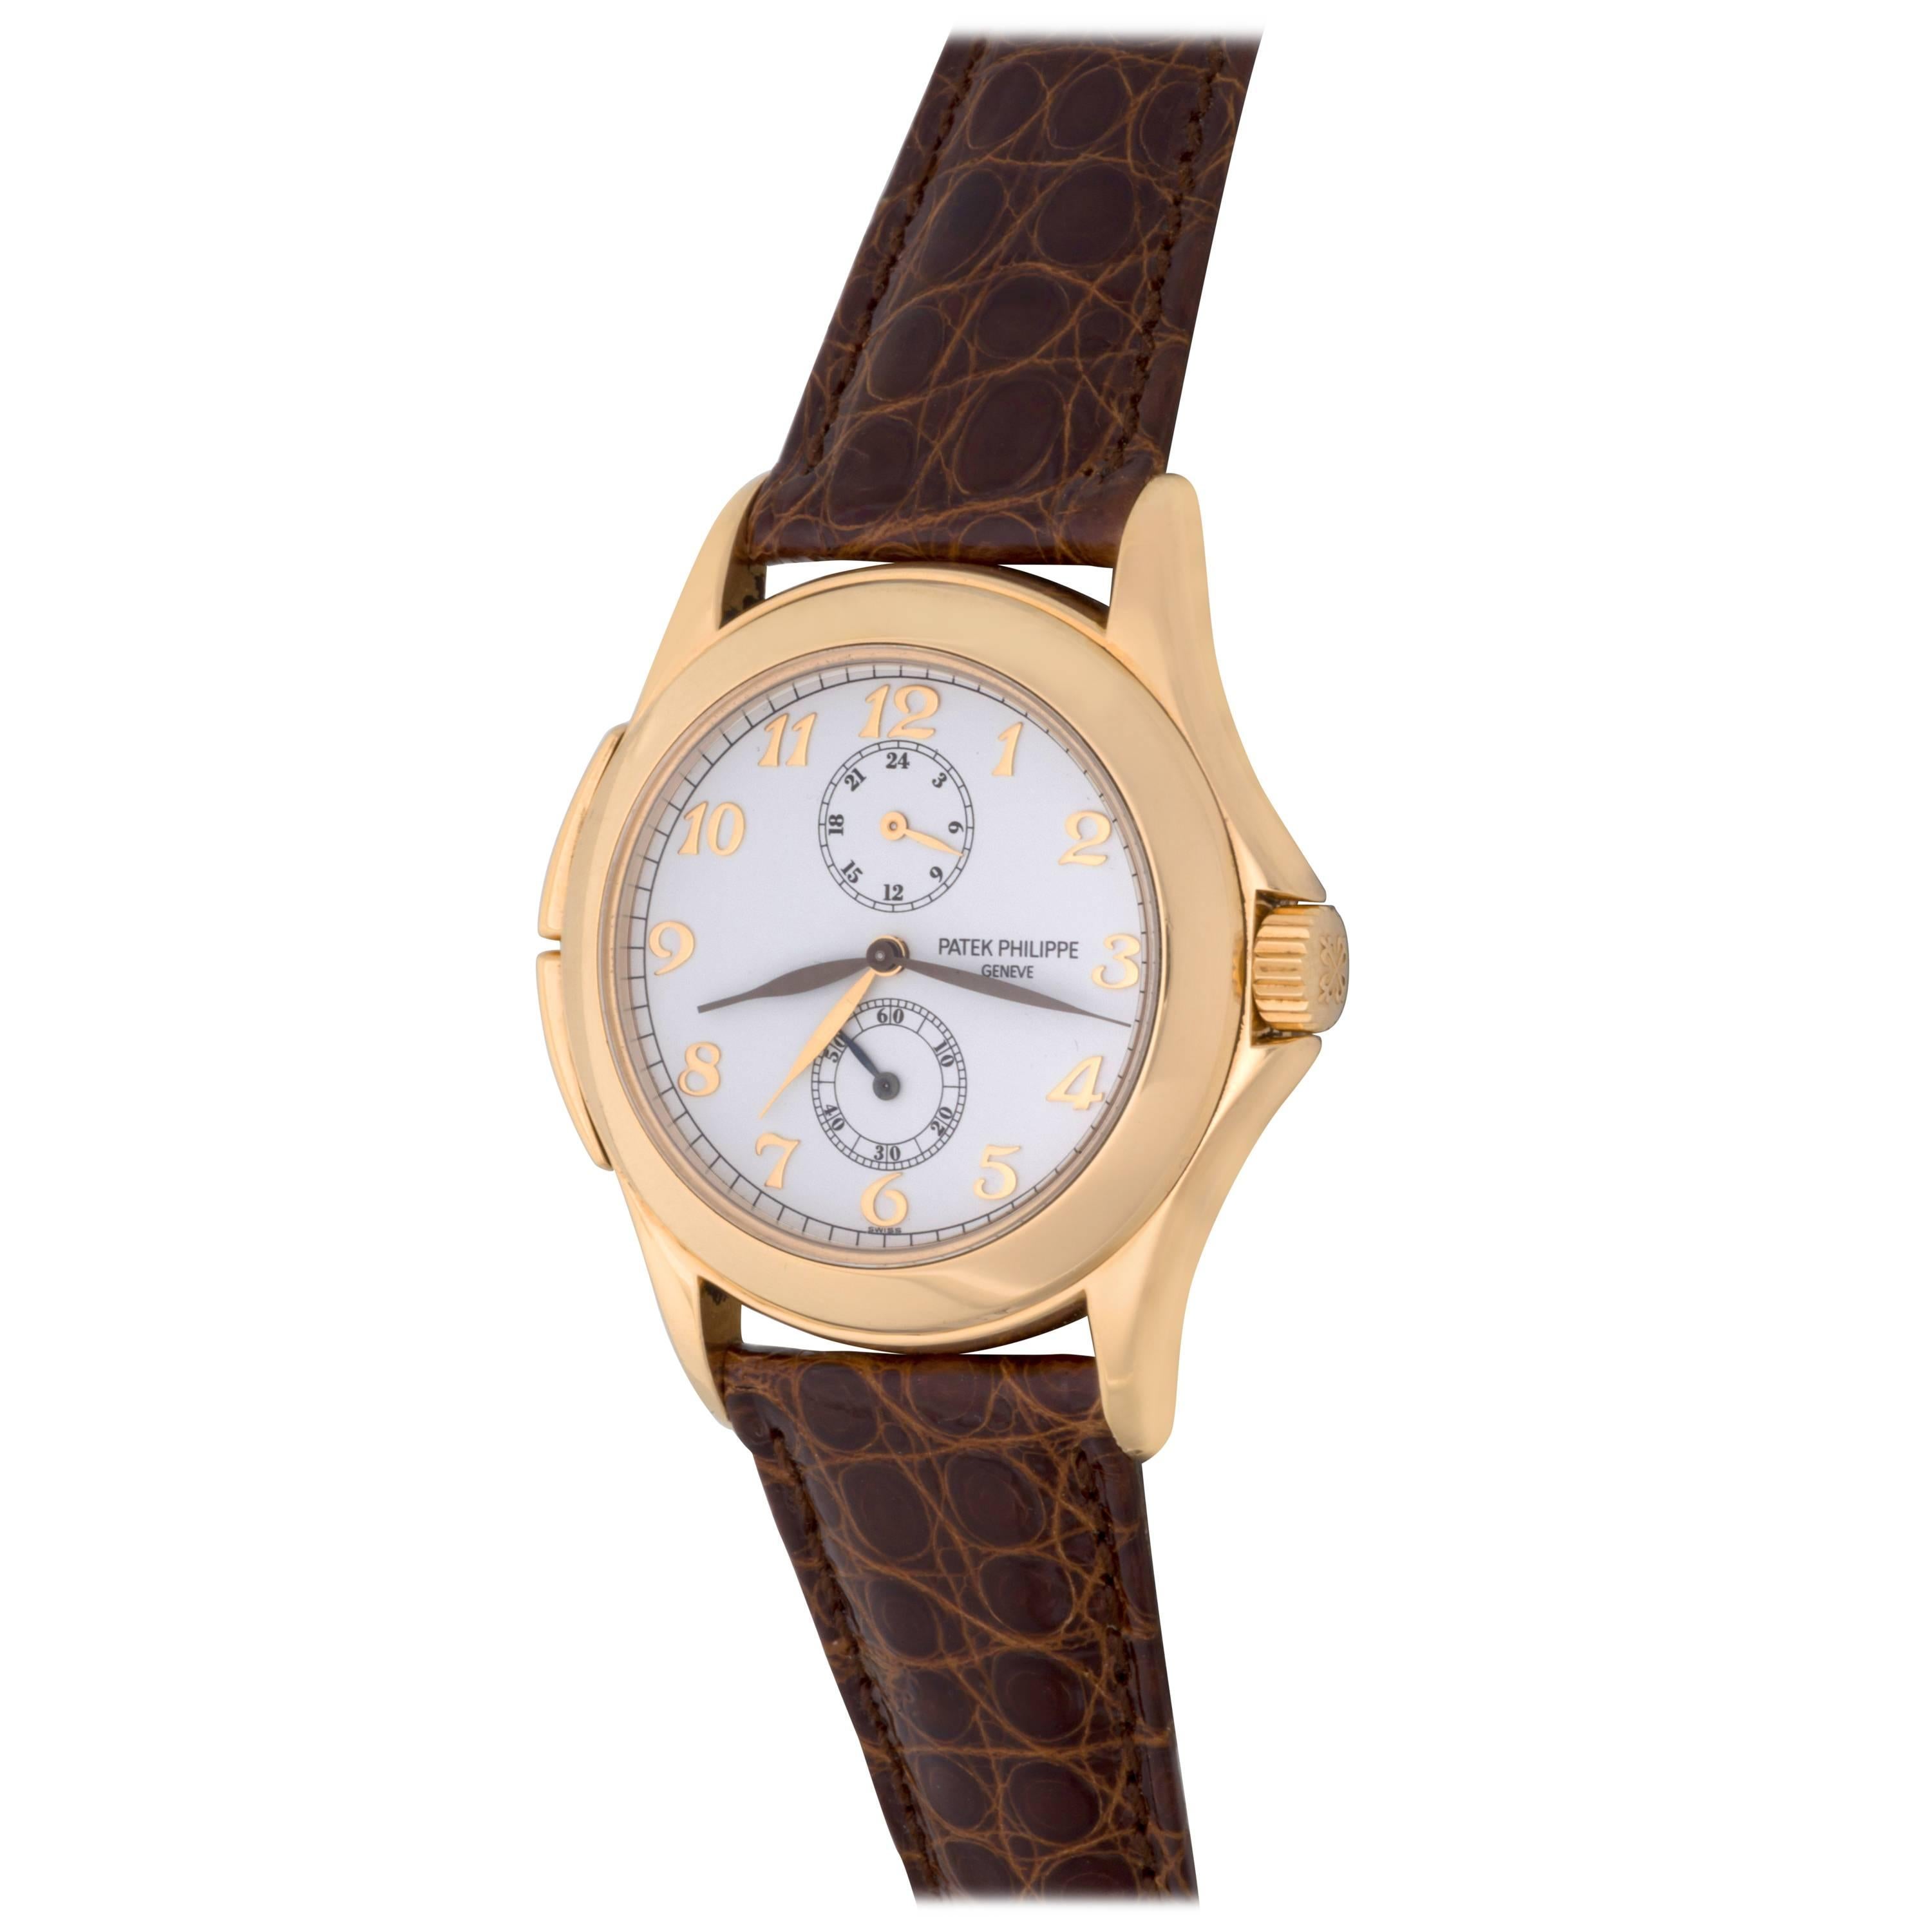 Patek Philippe Yellow Gold Travel Time Manual Wind Wristwatch Ref 5134J-001 